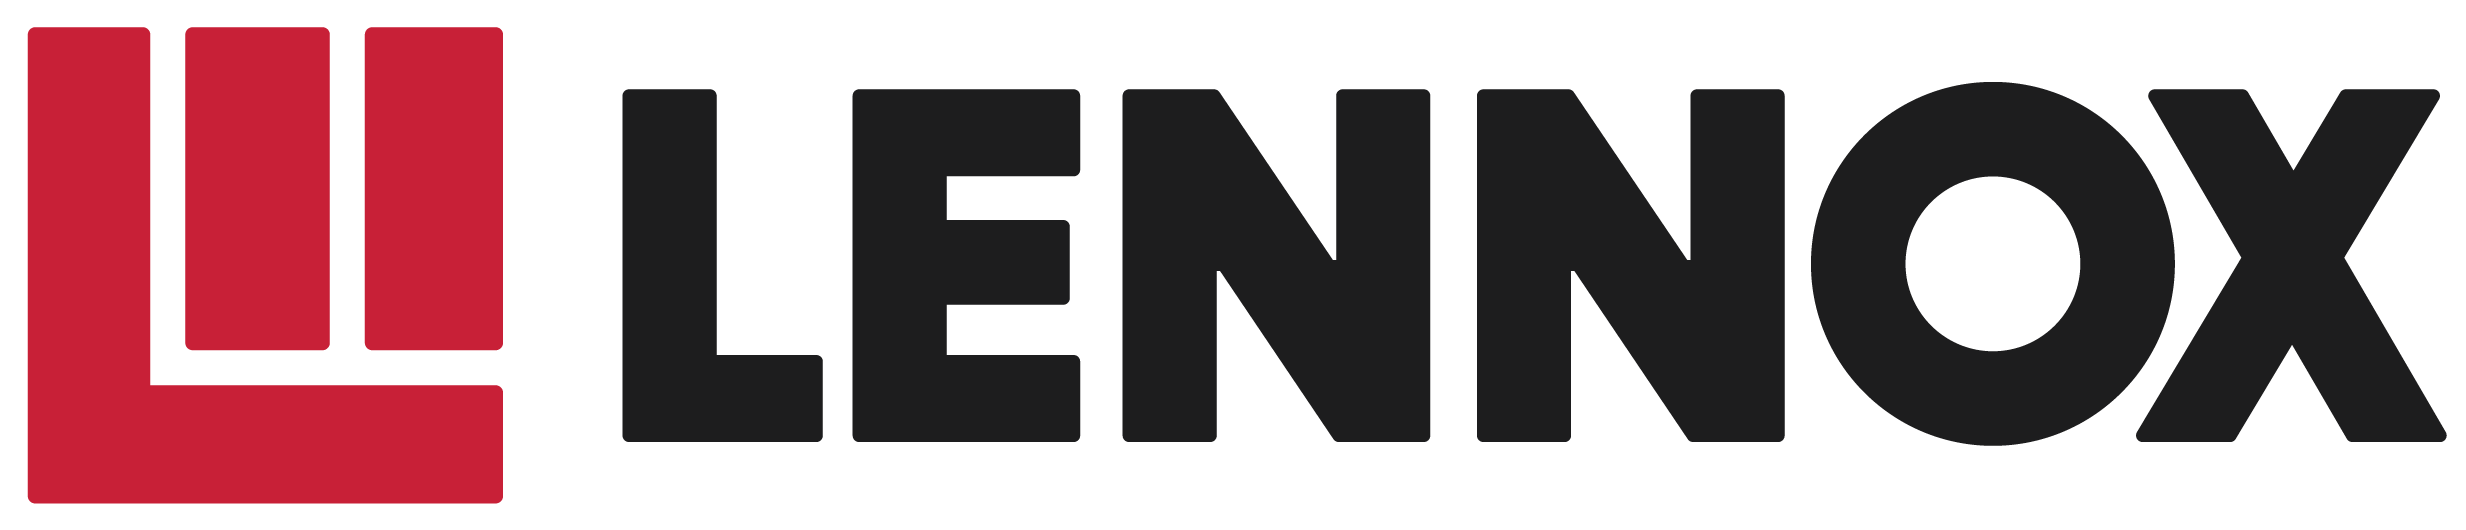 Lennox International Inc. Logo